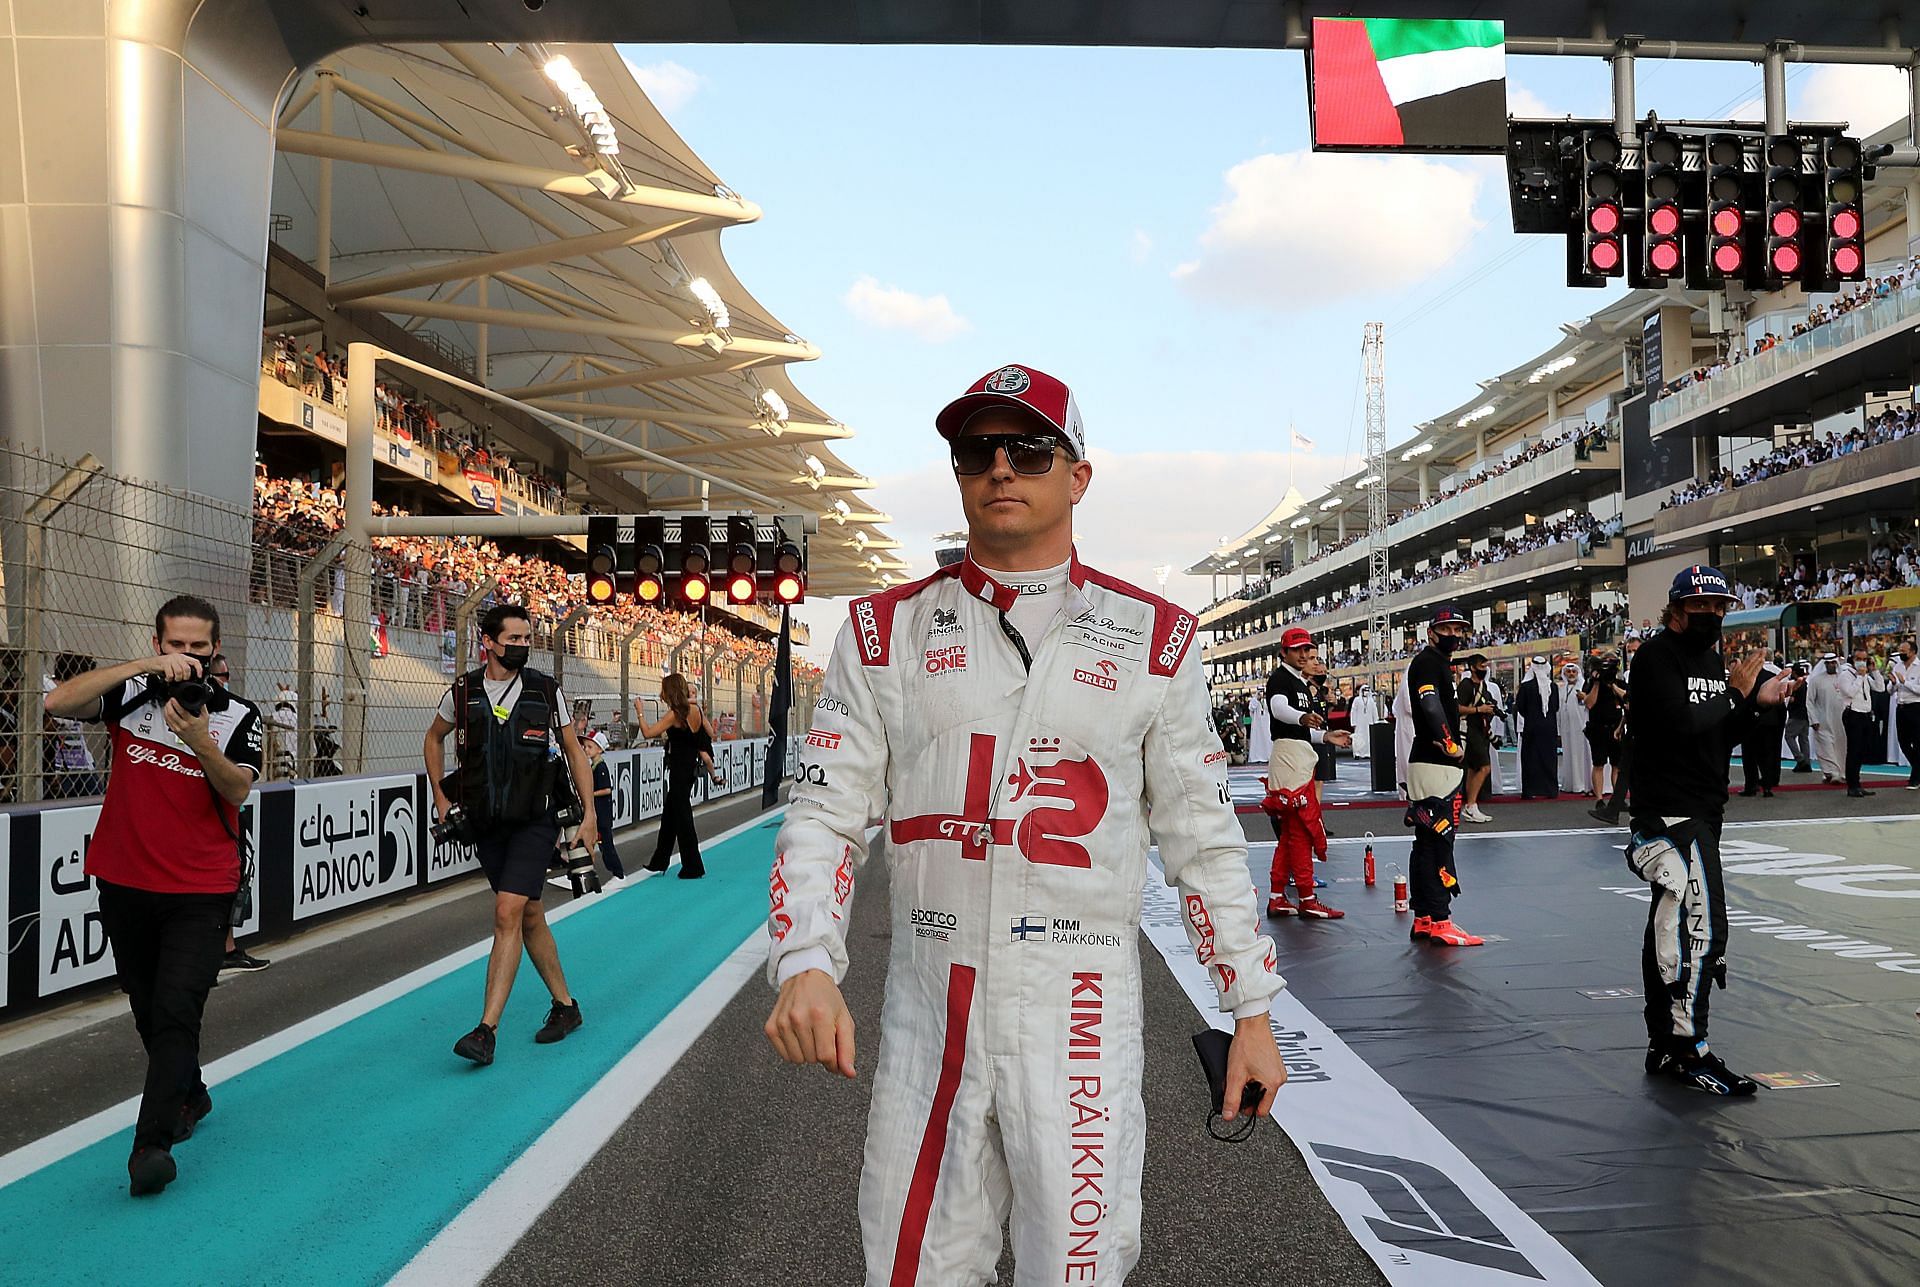 Kimi Raikkonen walks on the grid before the final race of his career in Abu Dhabi (Photo by Kamran Jebreili - Pool/Getty Images)